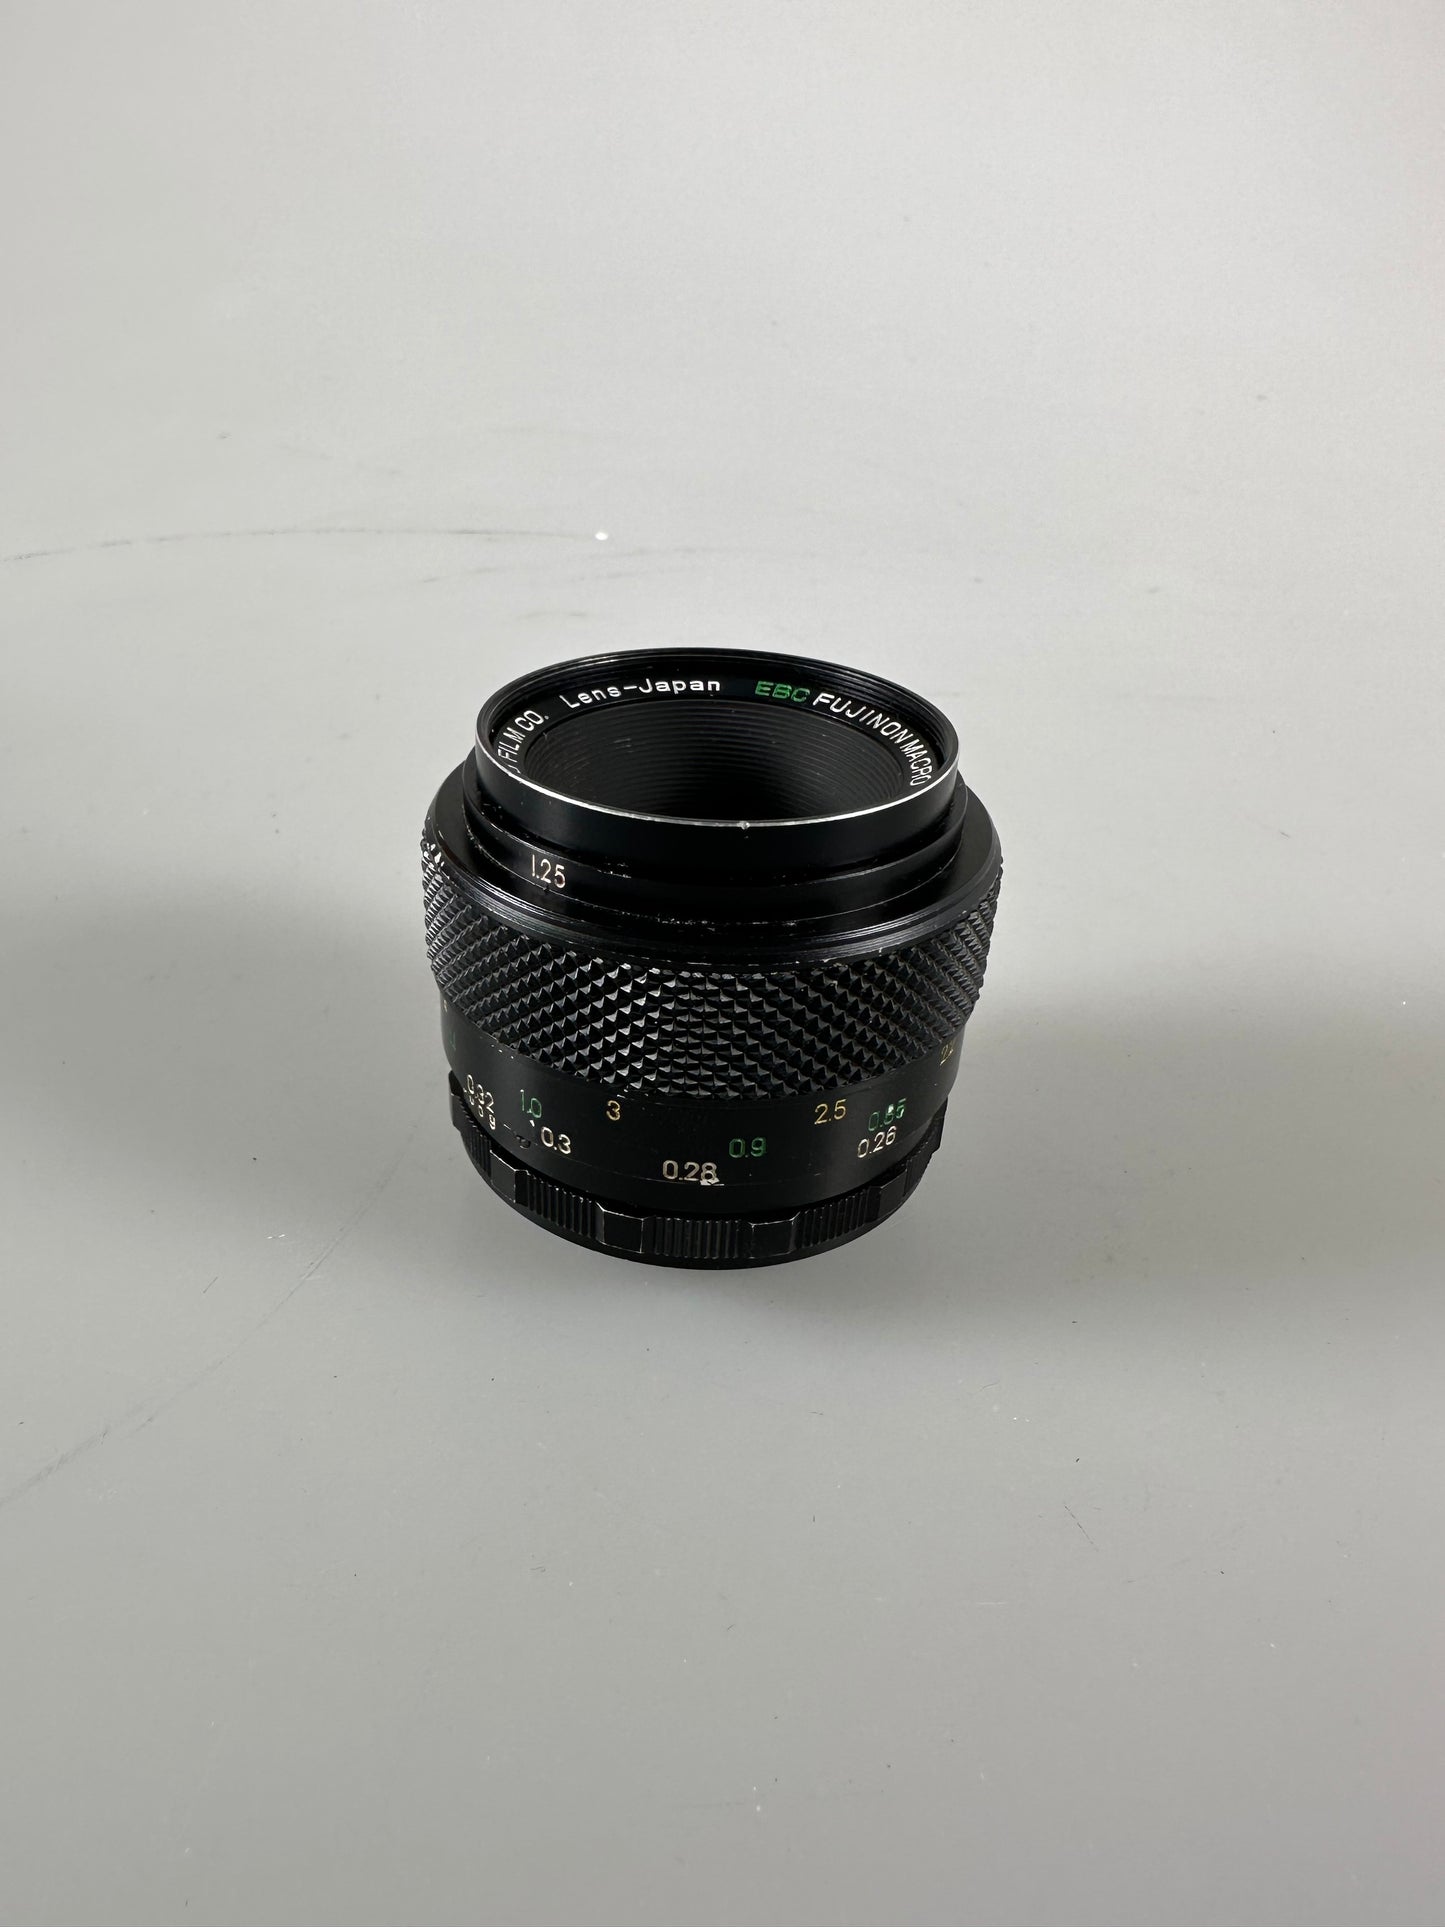 Fuji EBC Fujinon Macro 55mm f3.5 M42 Mount Lens